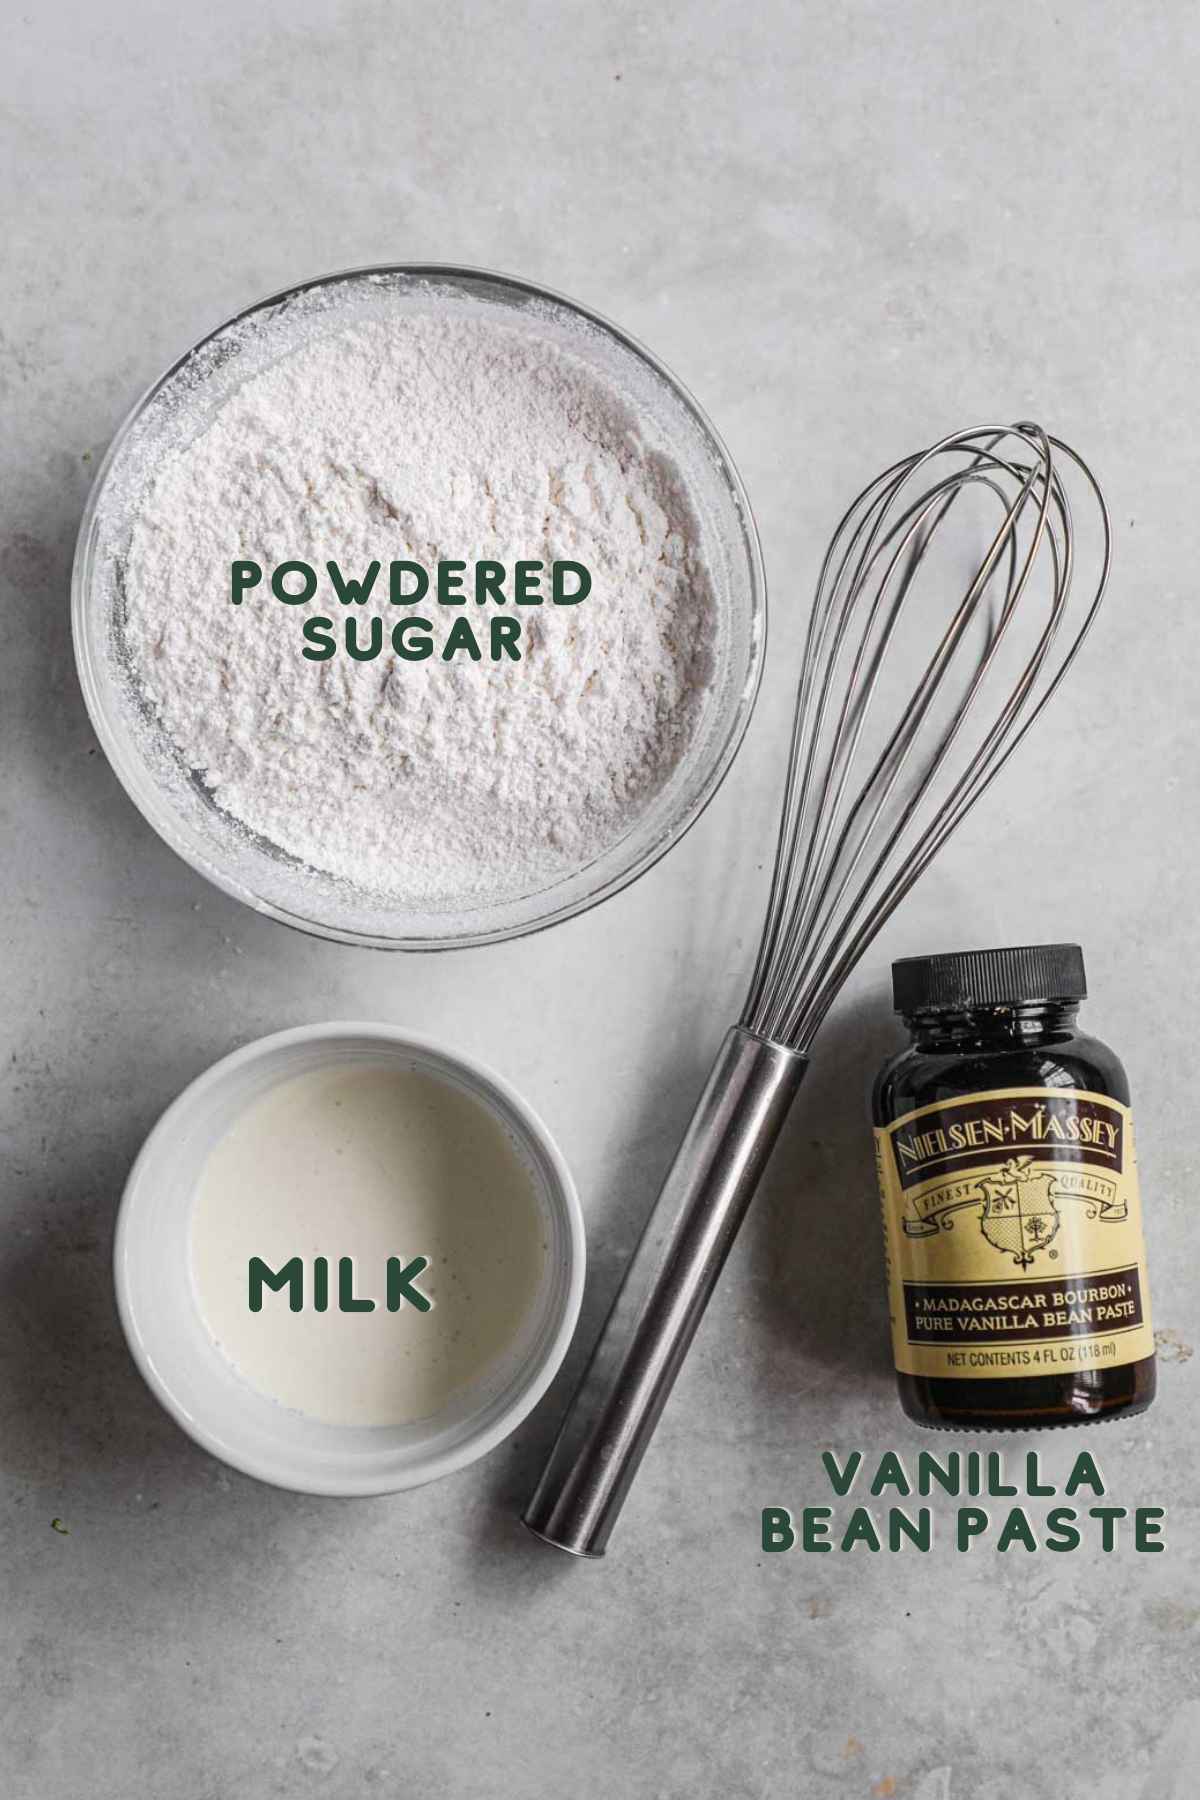 Ingredients to make lemon curd coffee cake vanilla bean glaze, powdered sugar, vanilla bean paste, and milk.